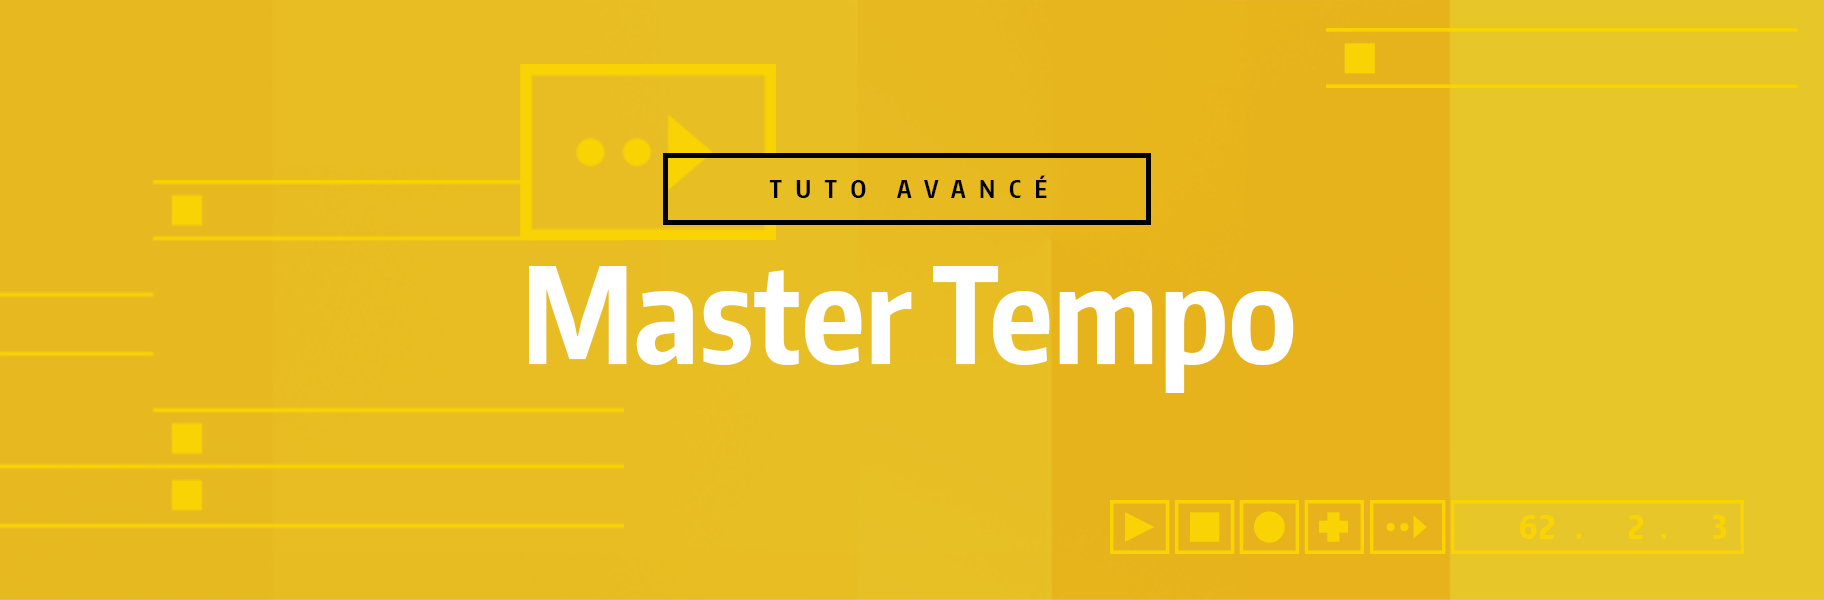 Tutoriel Ableton Live - Master Tempo